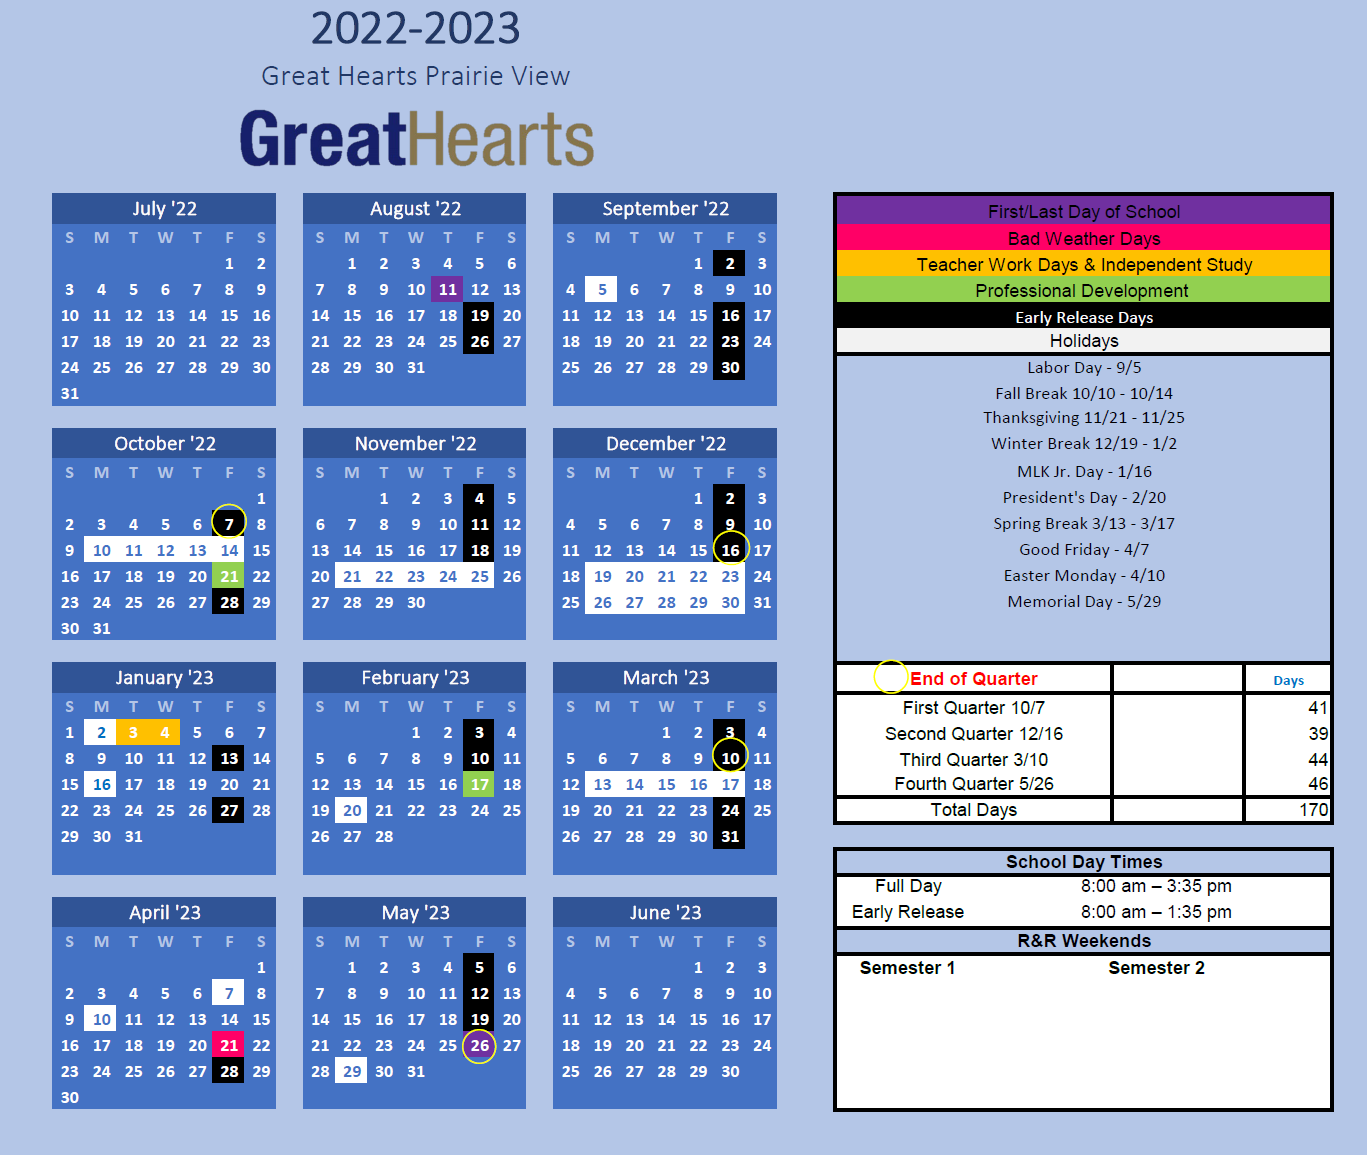 academic-calendar-great-hearts-prairie-view-expanding-k-8